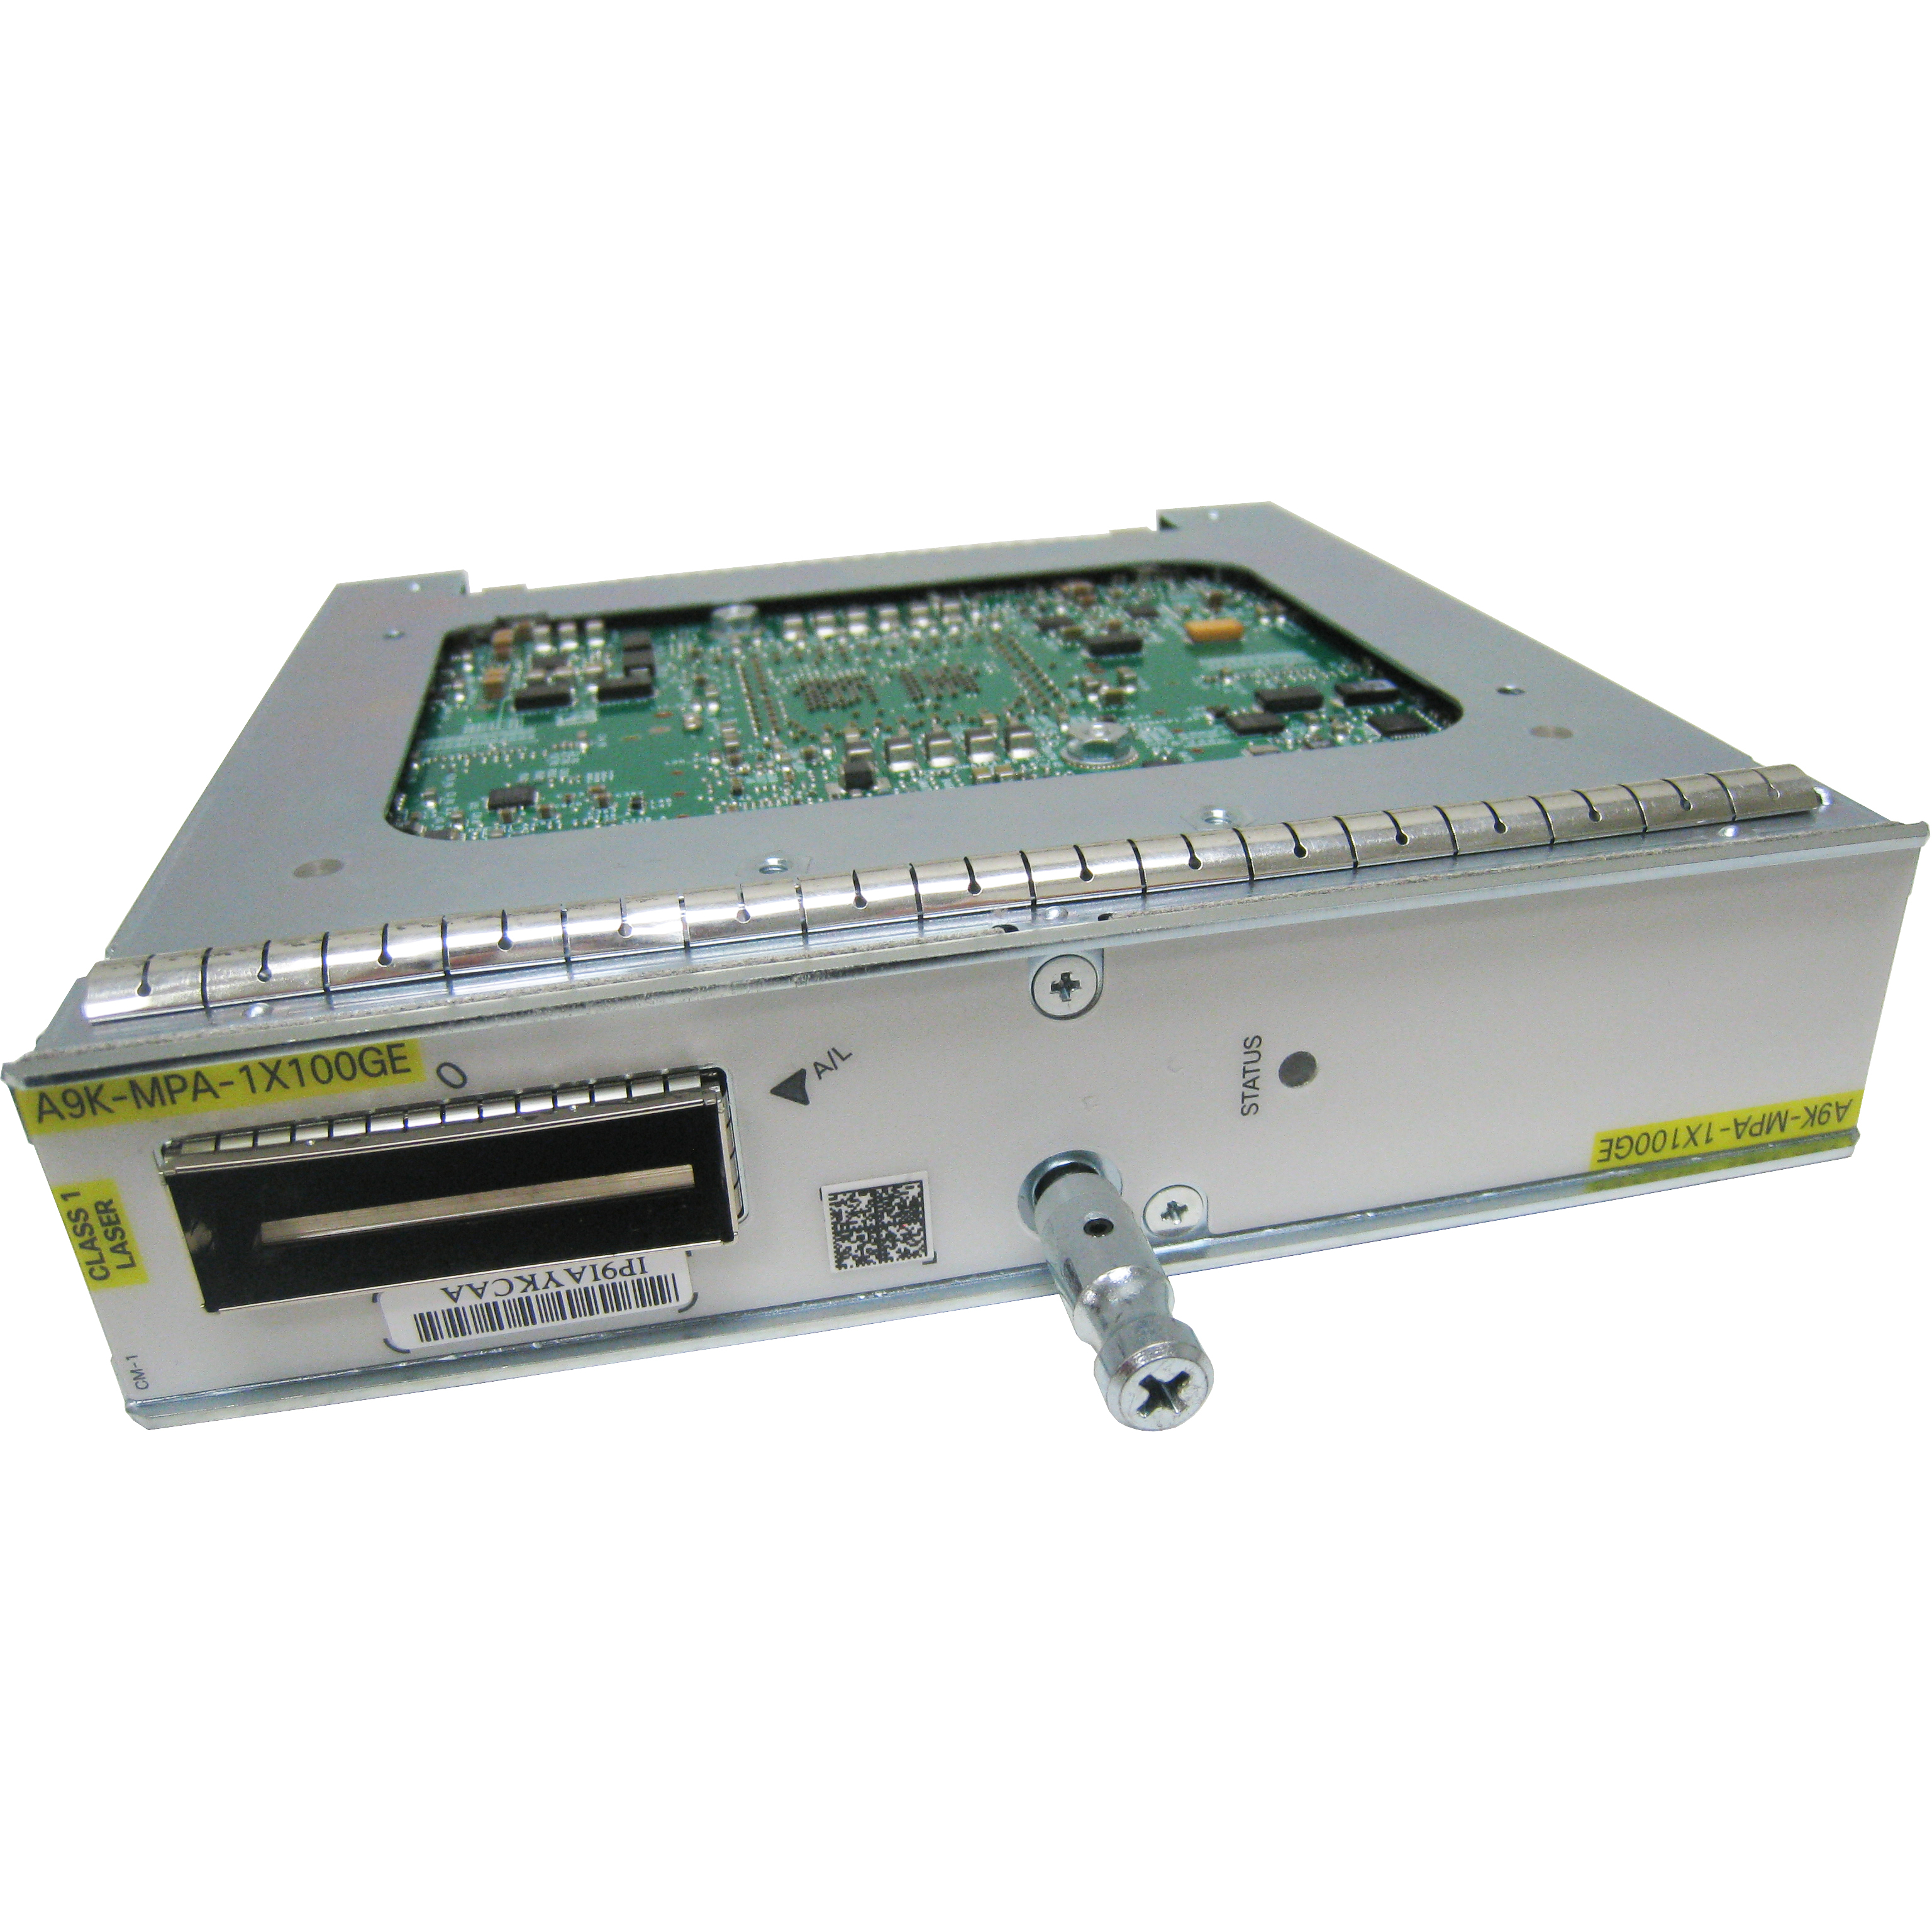 Cisco A9K-MPA-1X100GE